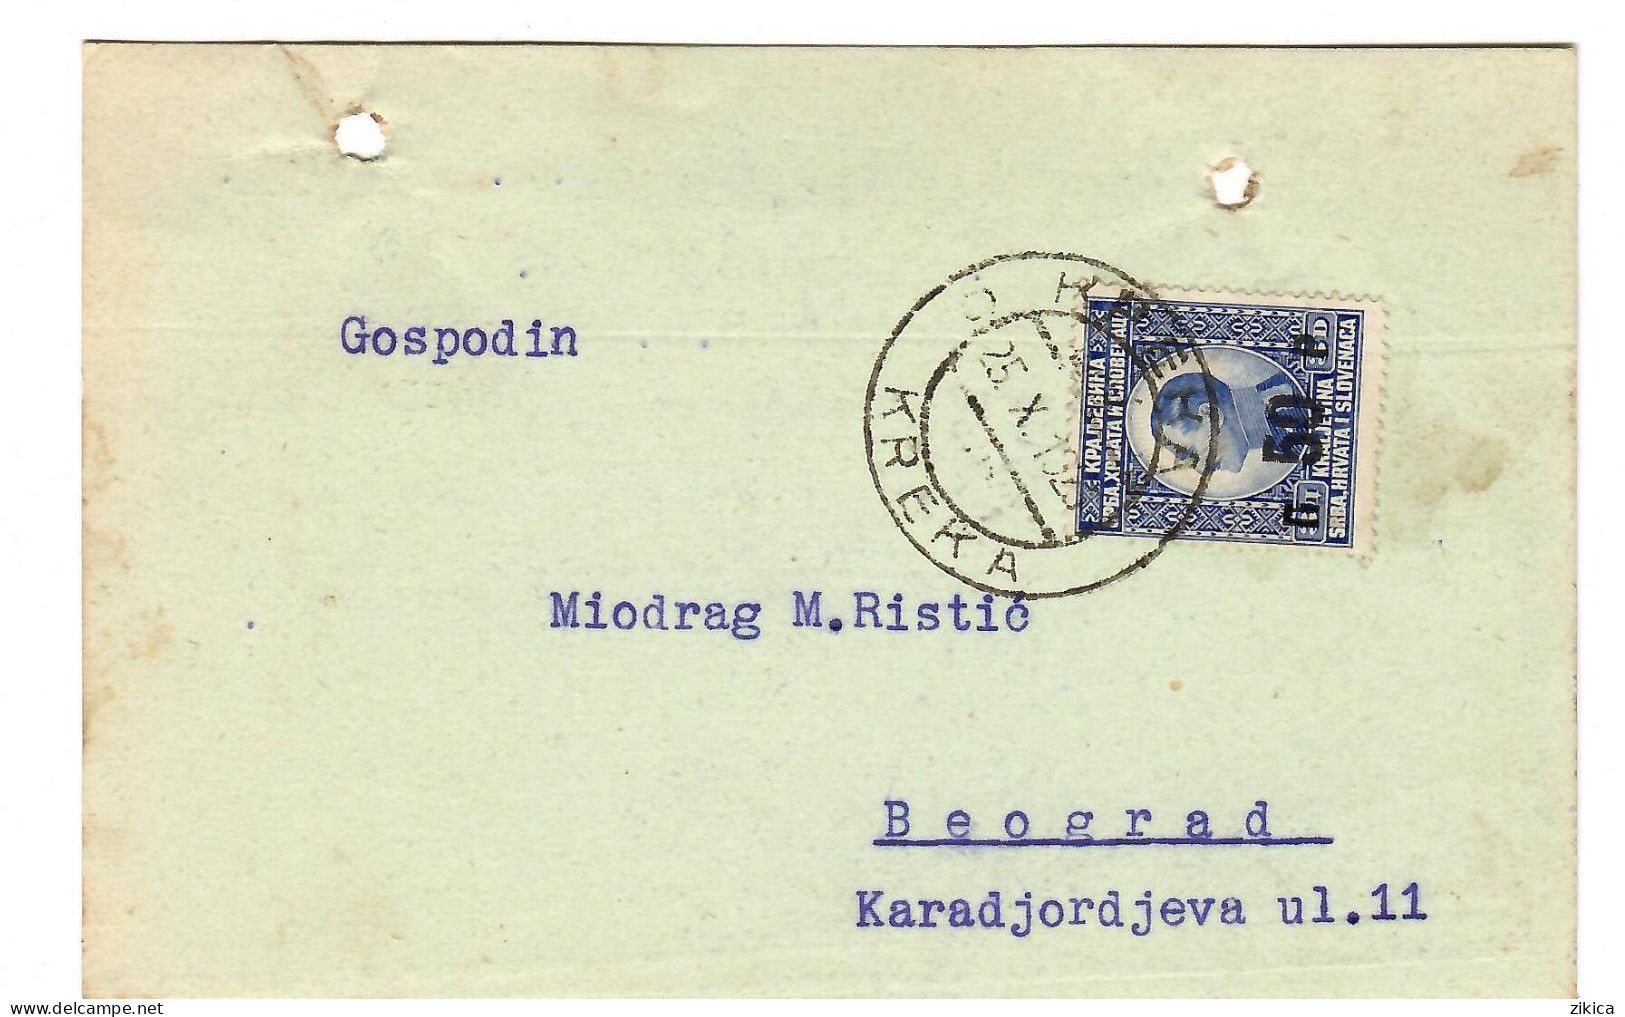 Postcard 1925 Kreka (Mine In Bosnia And Herzegovina ) - M.FISCHIA ( JEWISH FAMILIES ) Jewish - Lettres & Documents